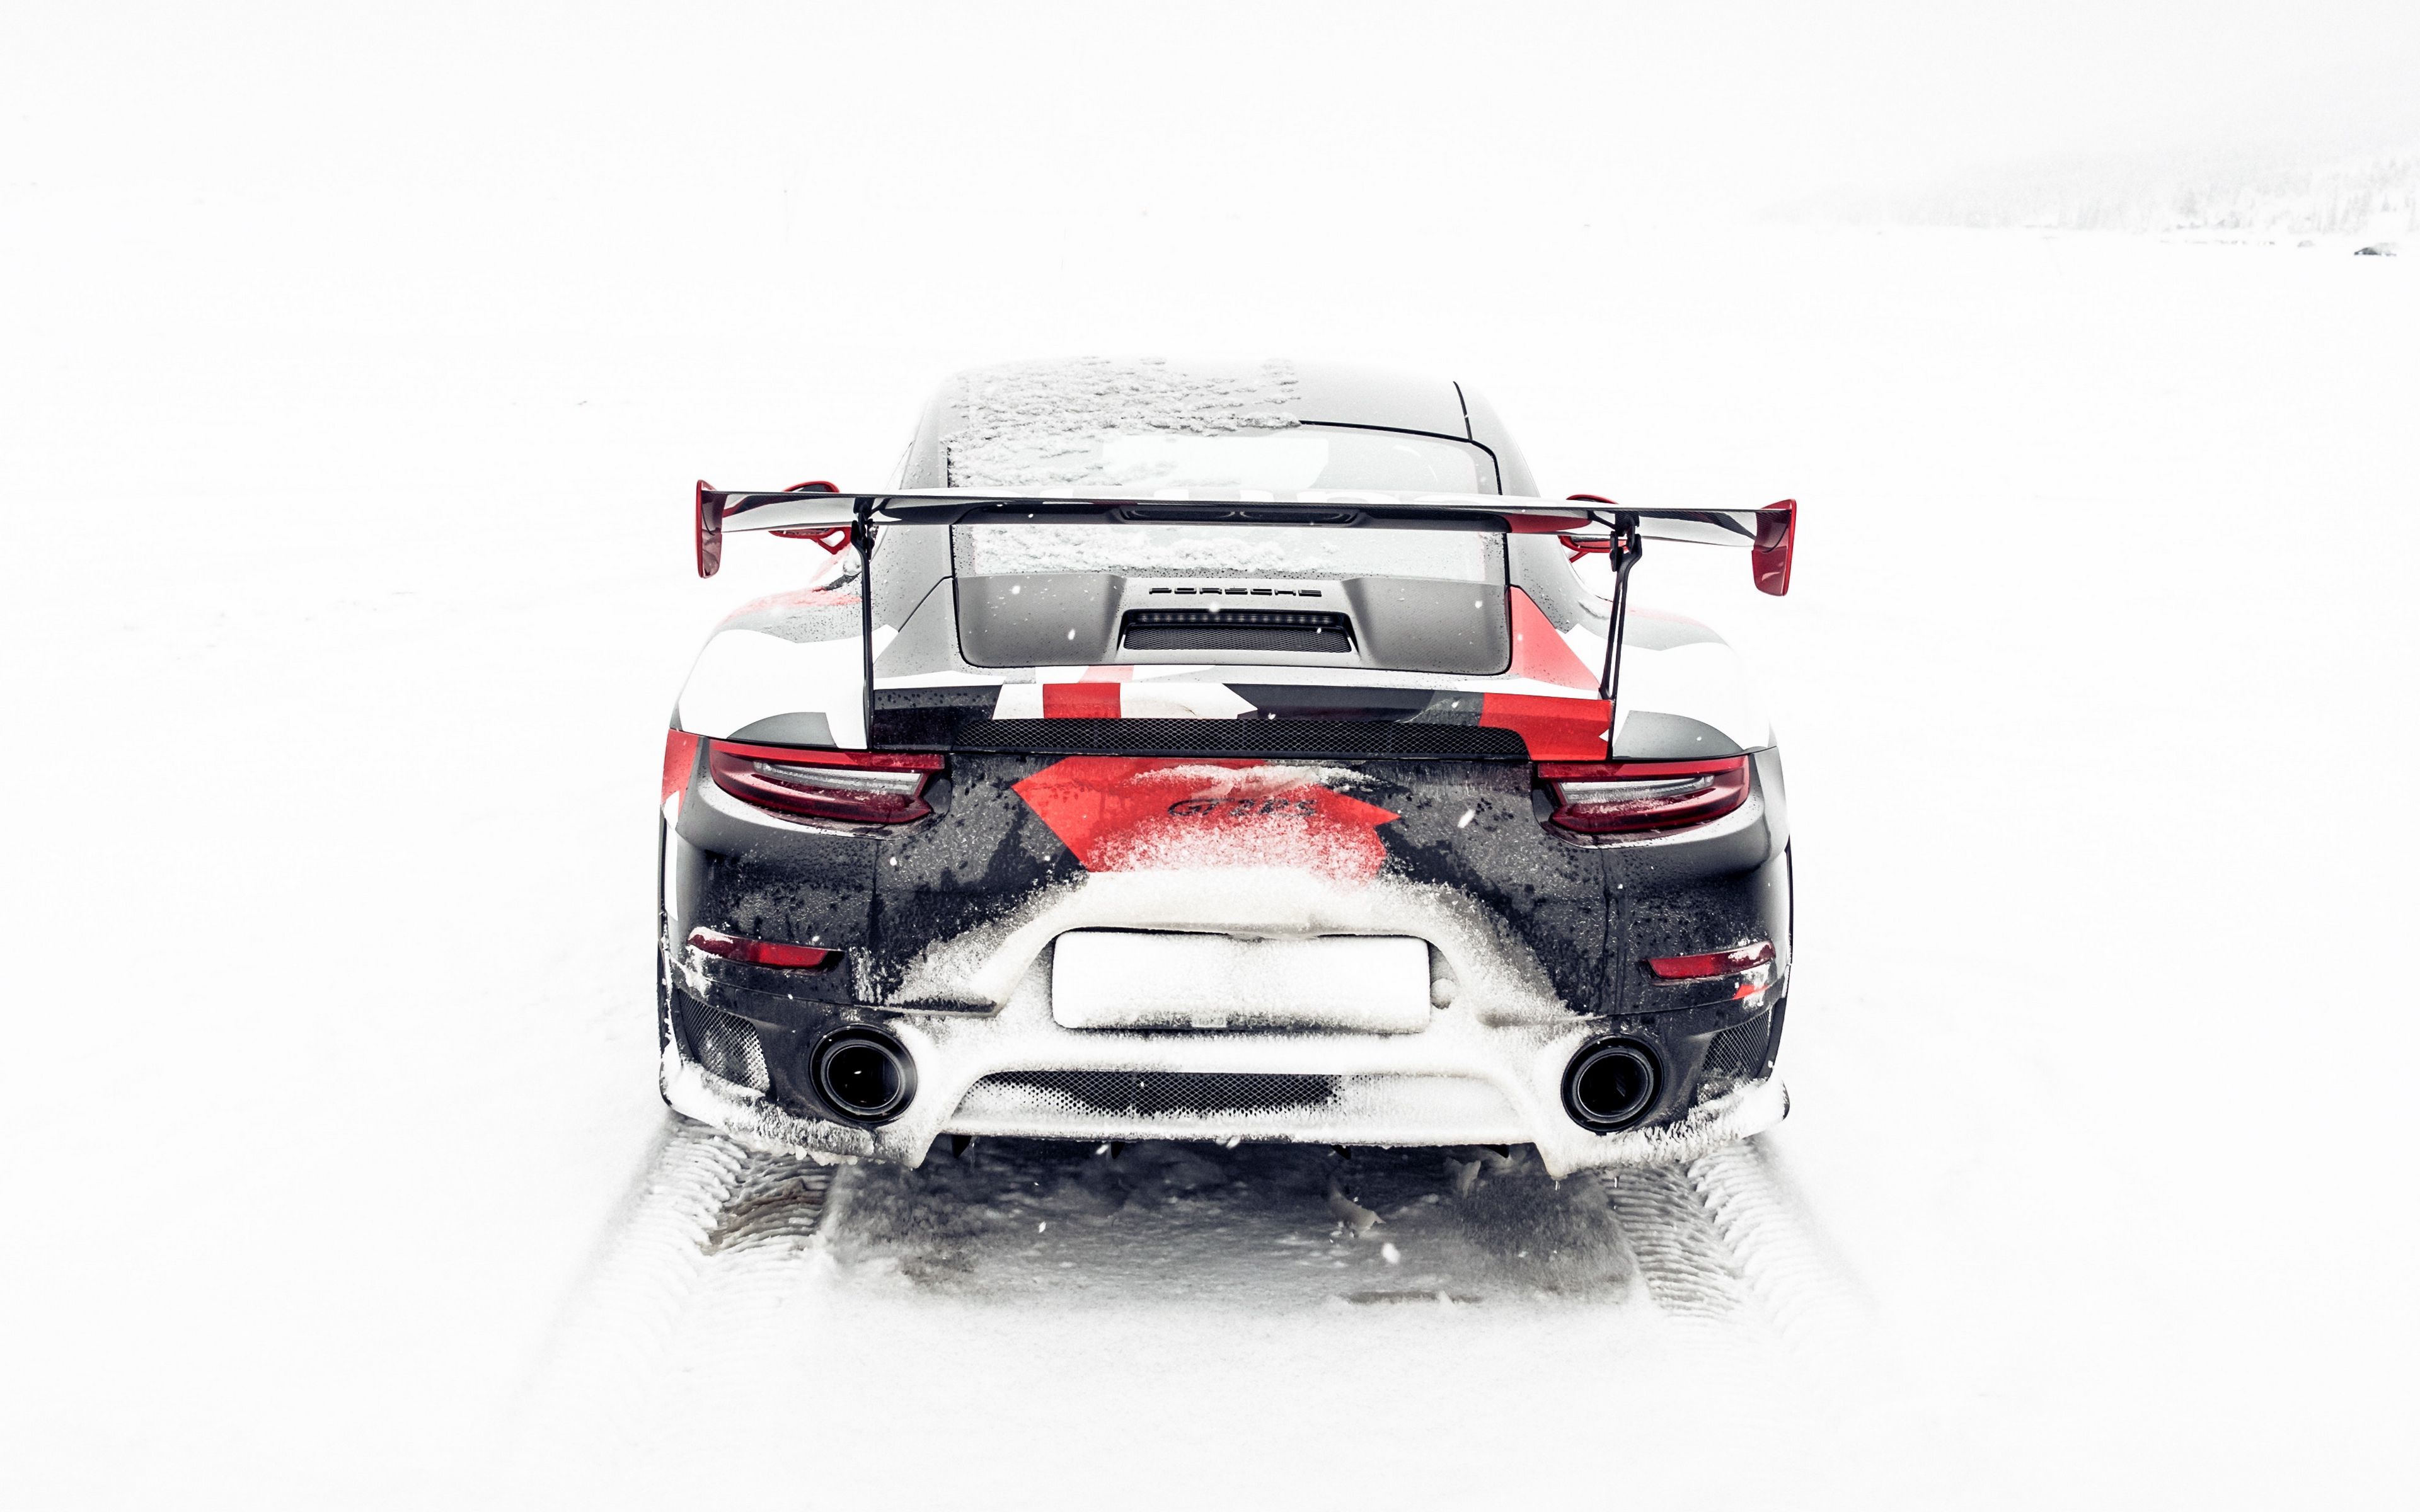 Download wallpaper 3840x2400 sports car, rear view, snow, winter, off road 4k ultra HD 16:10 HD background